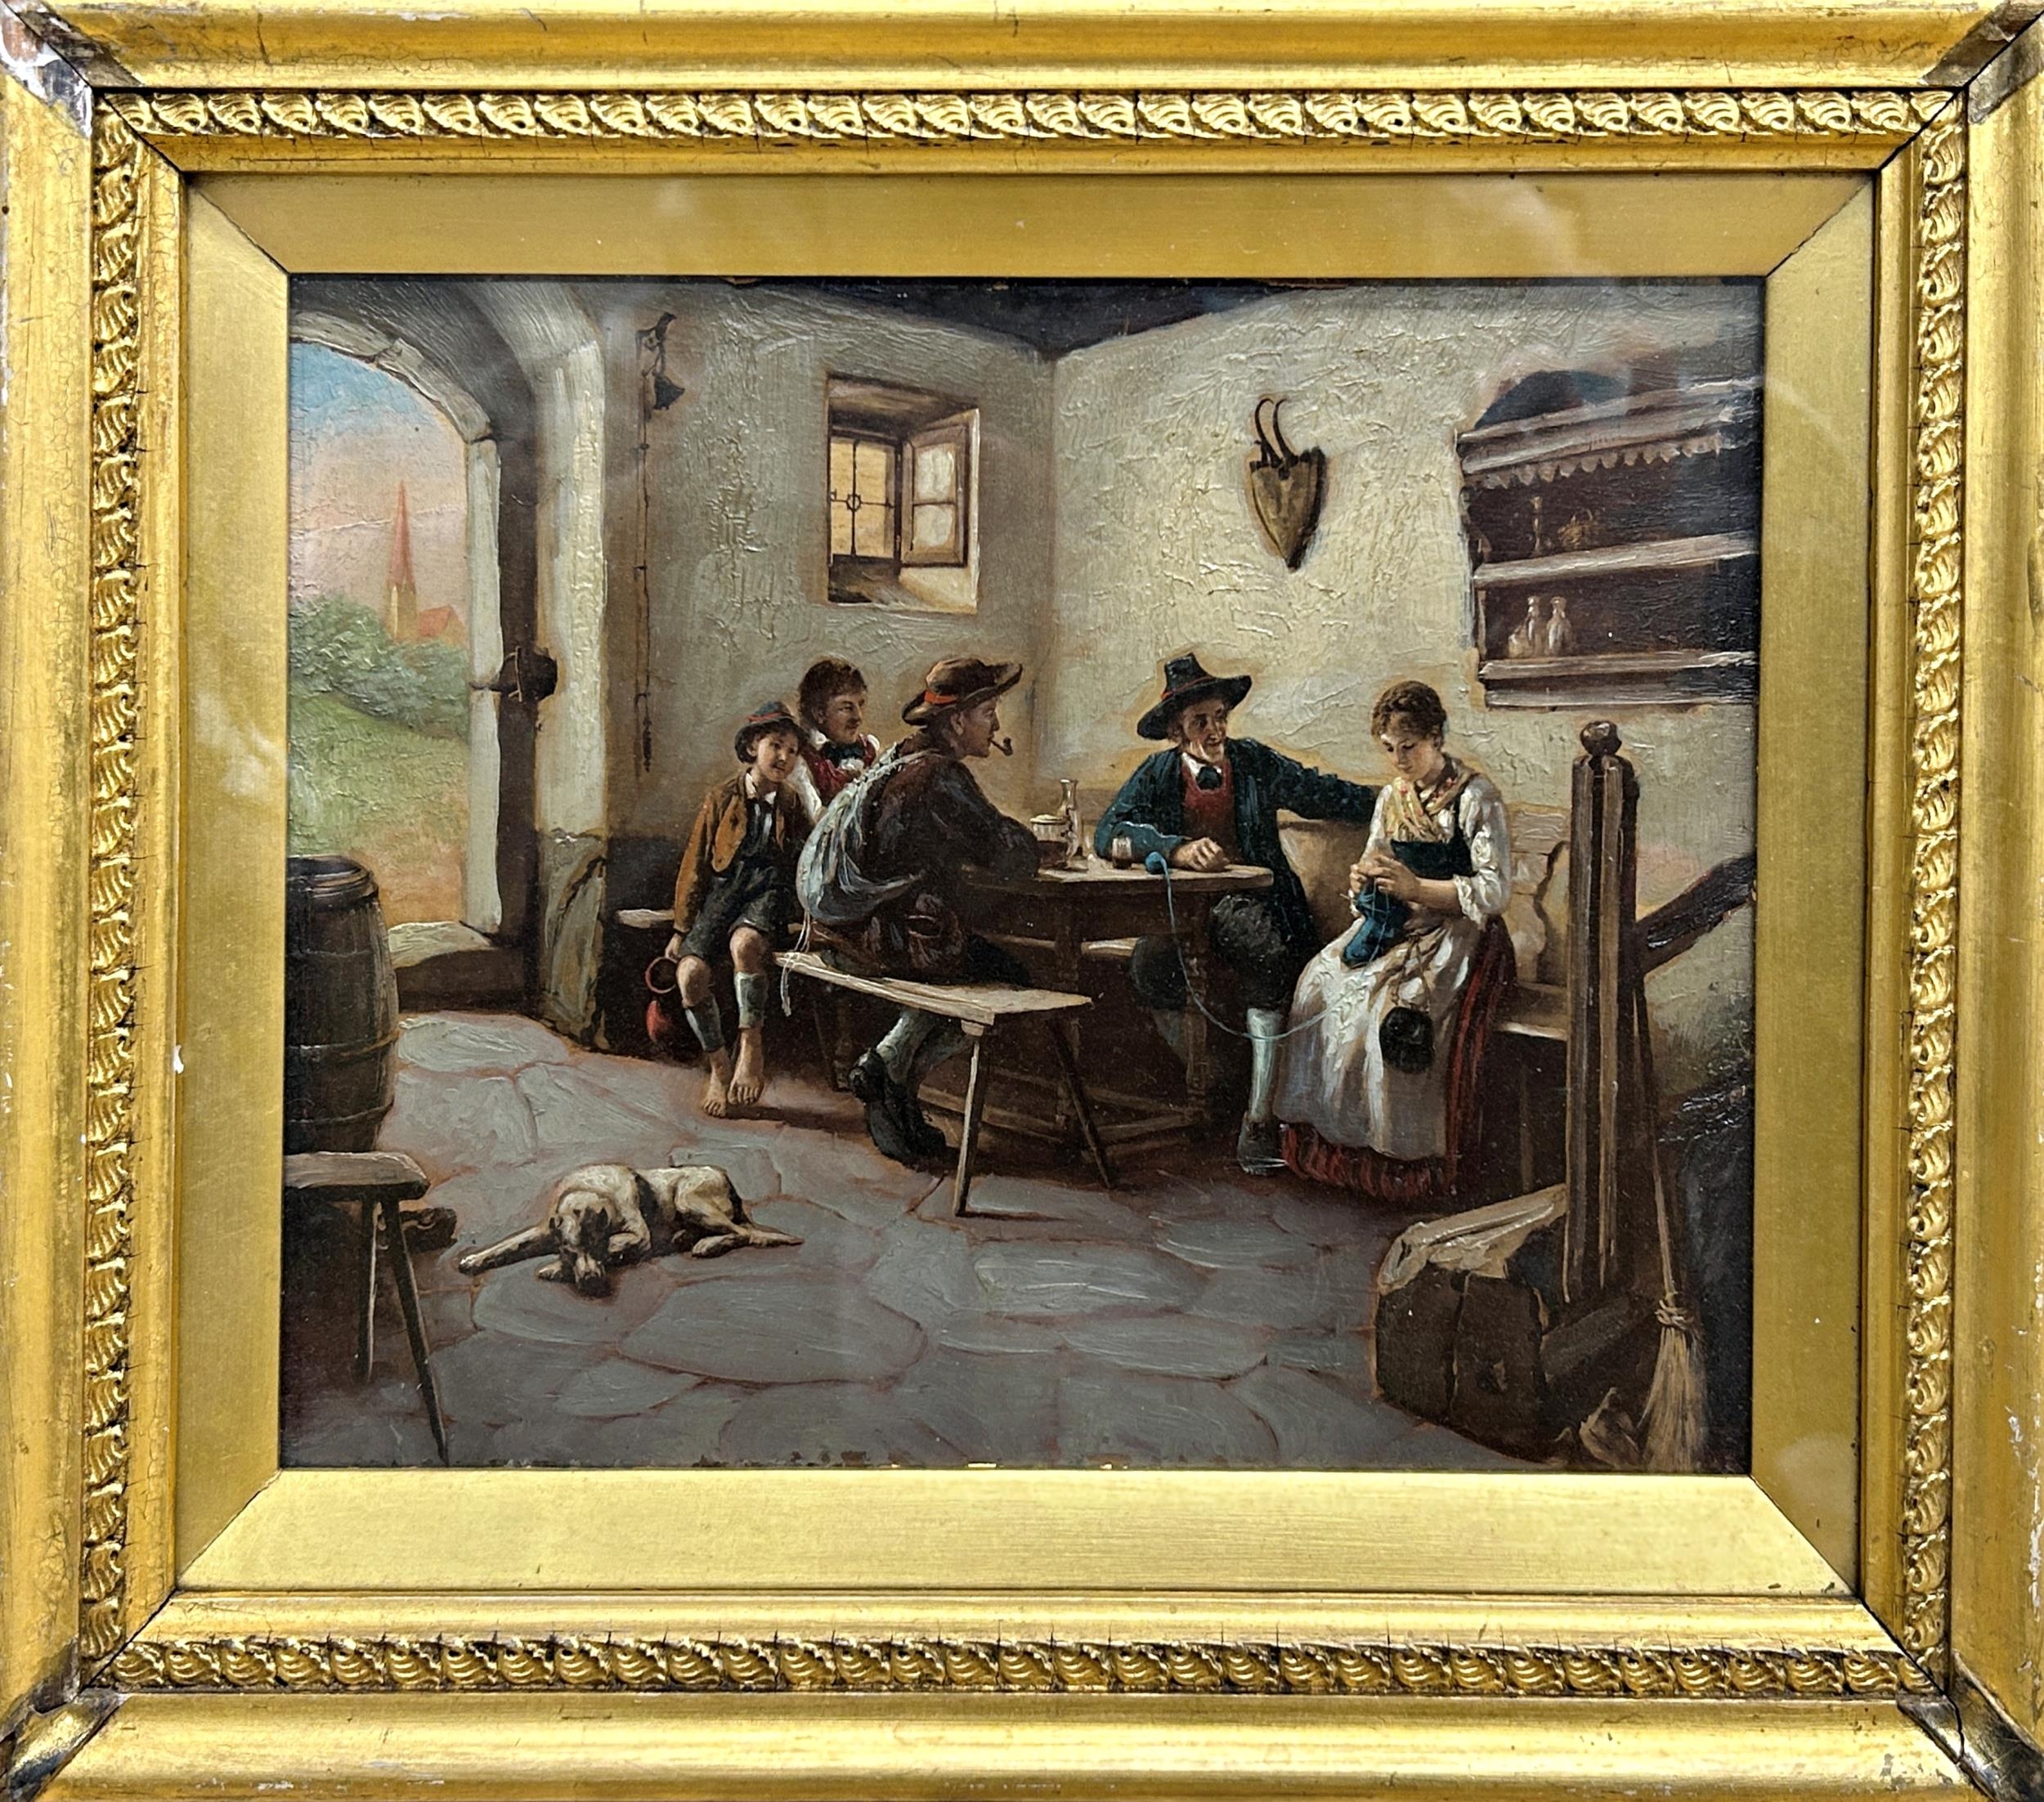 19th century Austrian school - Interior tavern scene, unsigned, oil on panel, 20 x 25cm, giltwood - Image 2 of 3